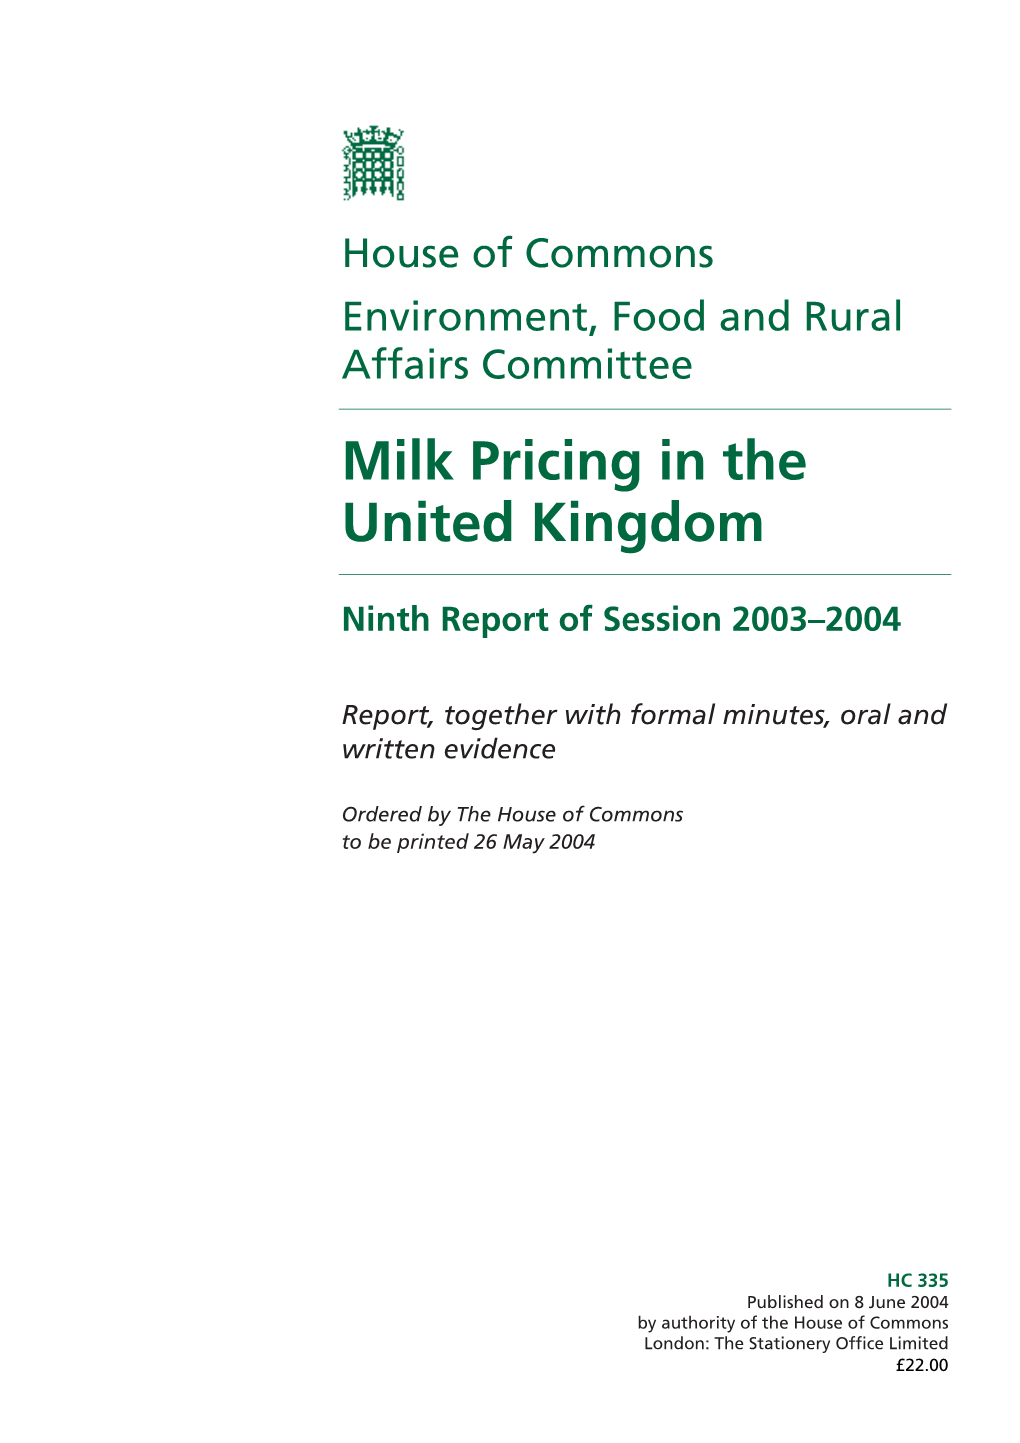 Milk Pricing in the United Kingdom